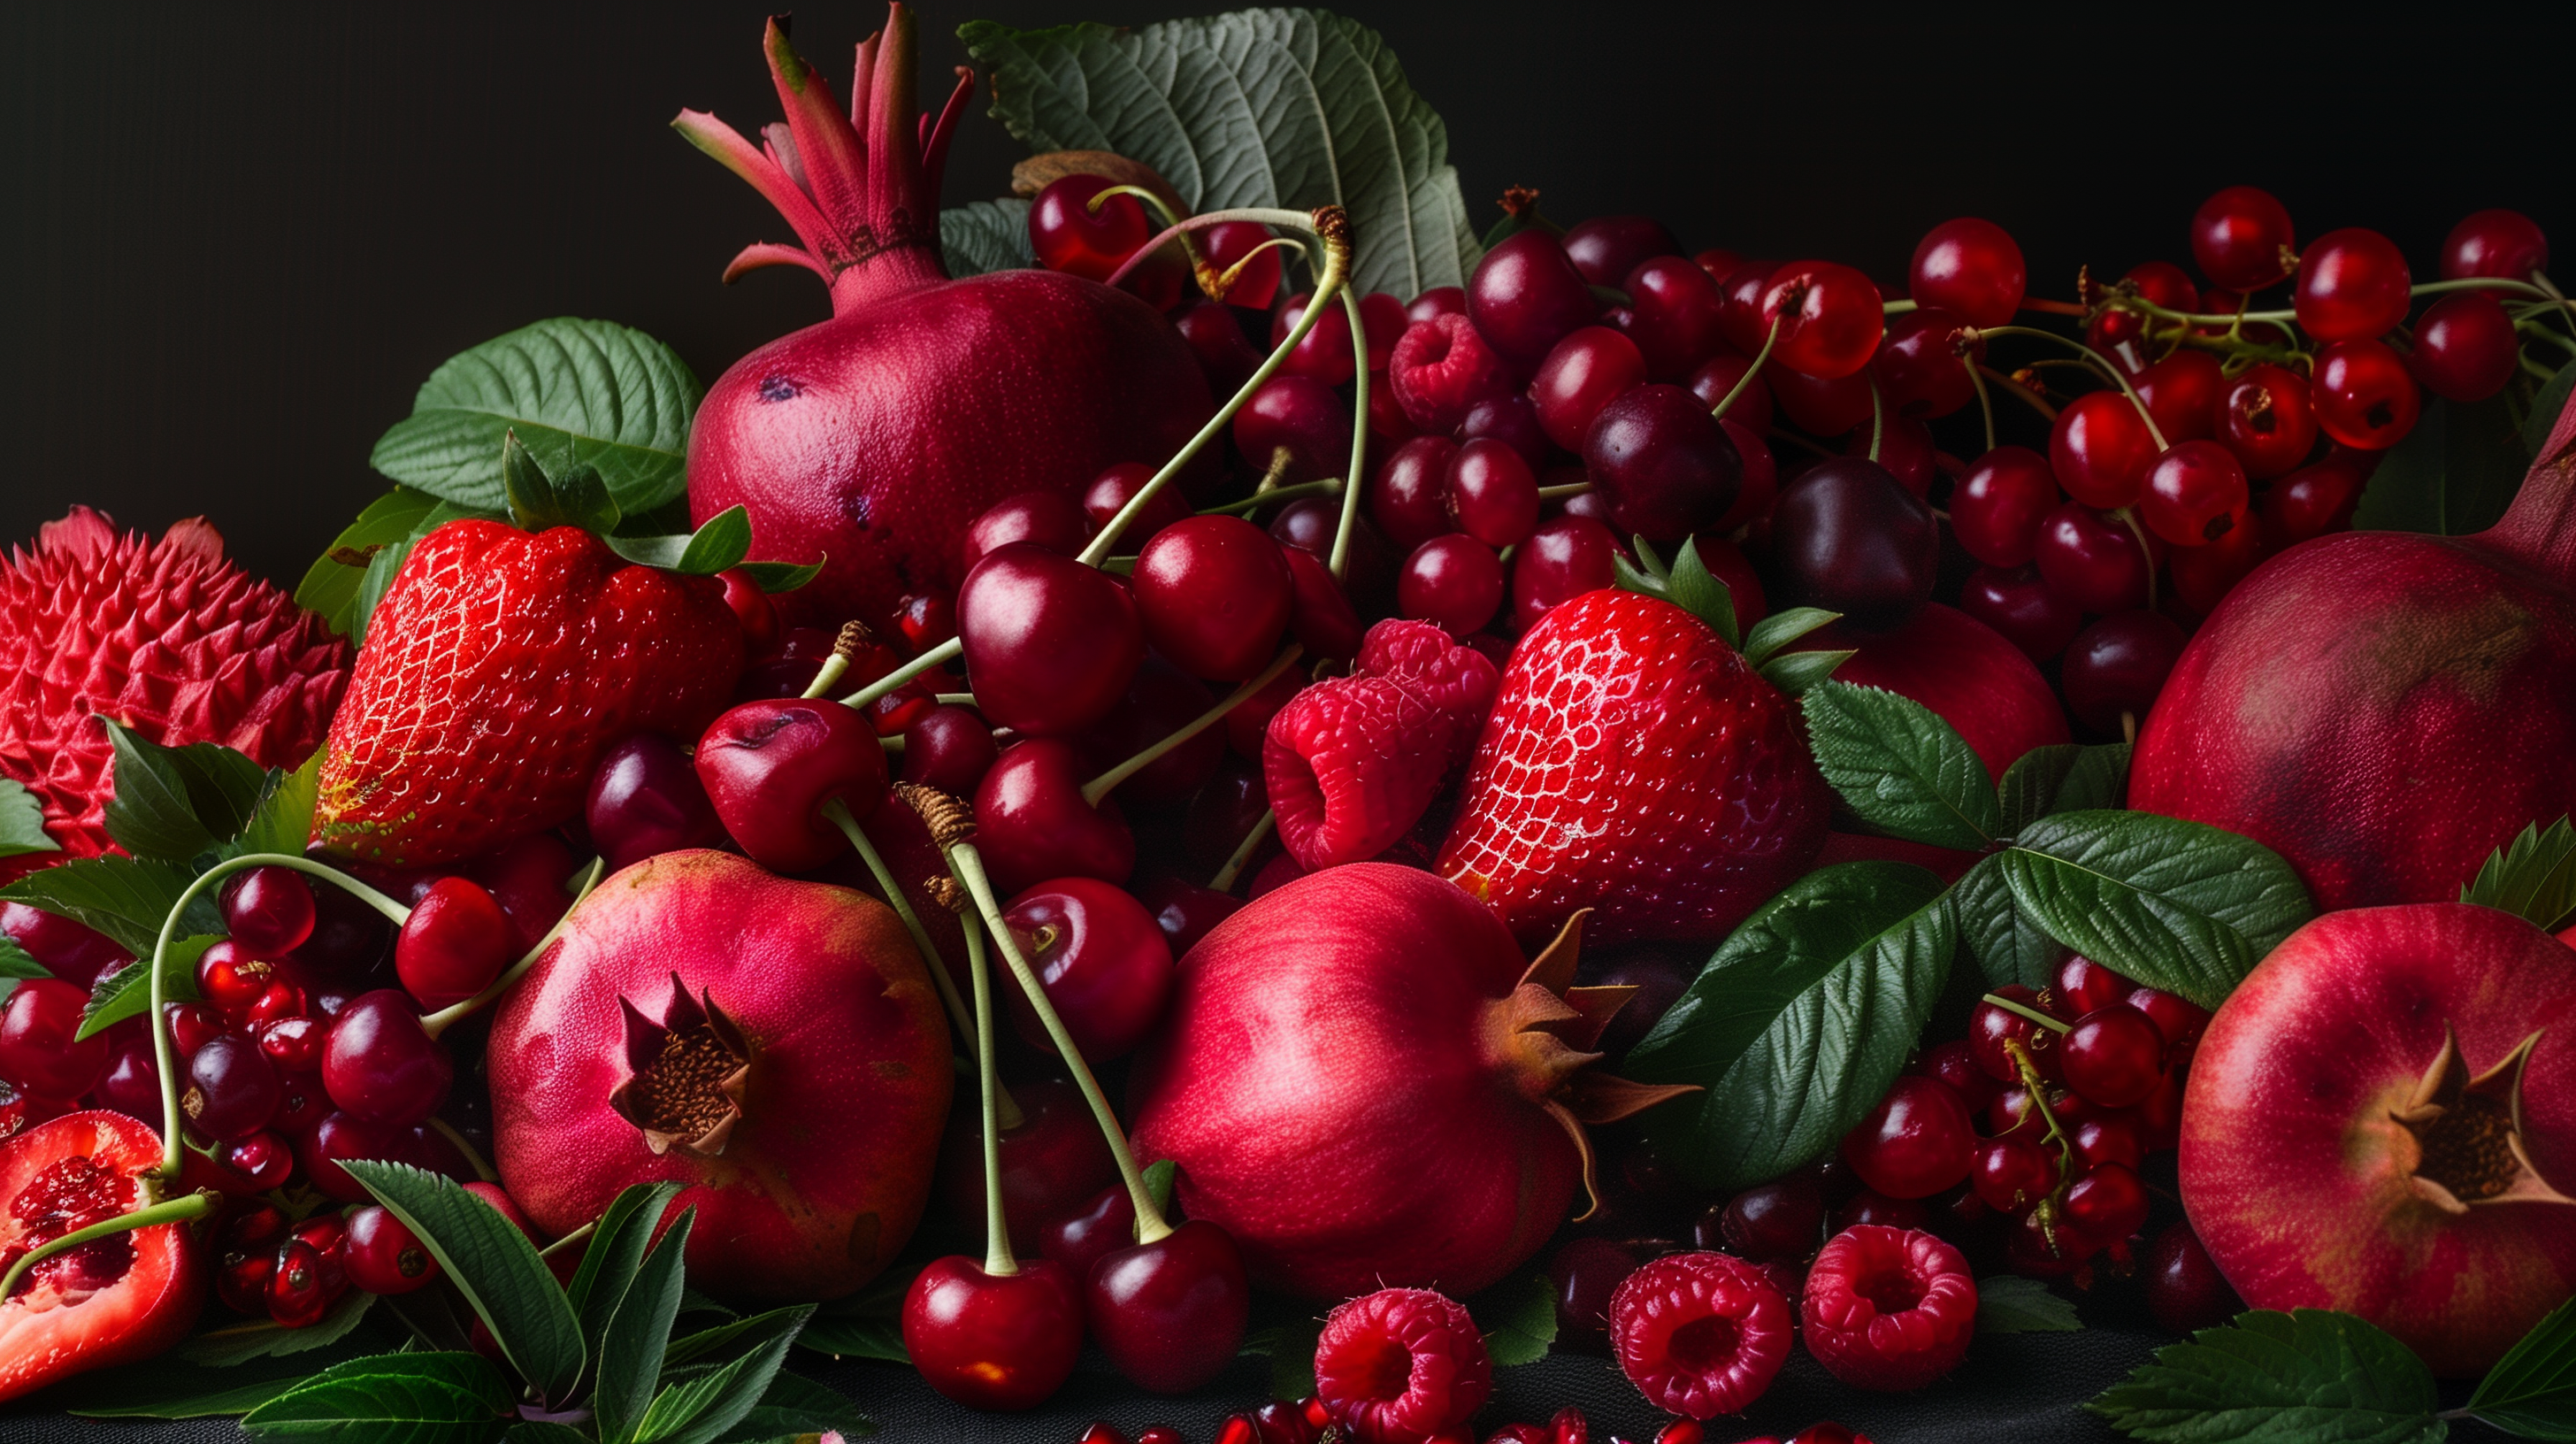 overflowing cornucopia of deep red superfoods: raspberries, strawberries, cherries, beets, and pomegranates